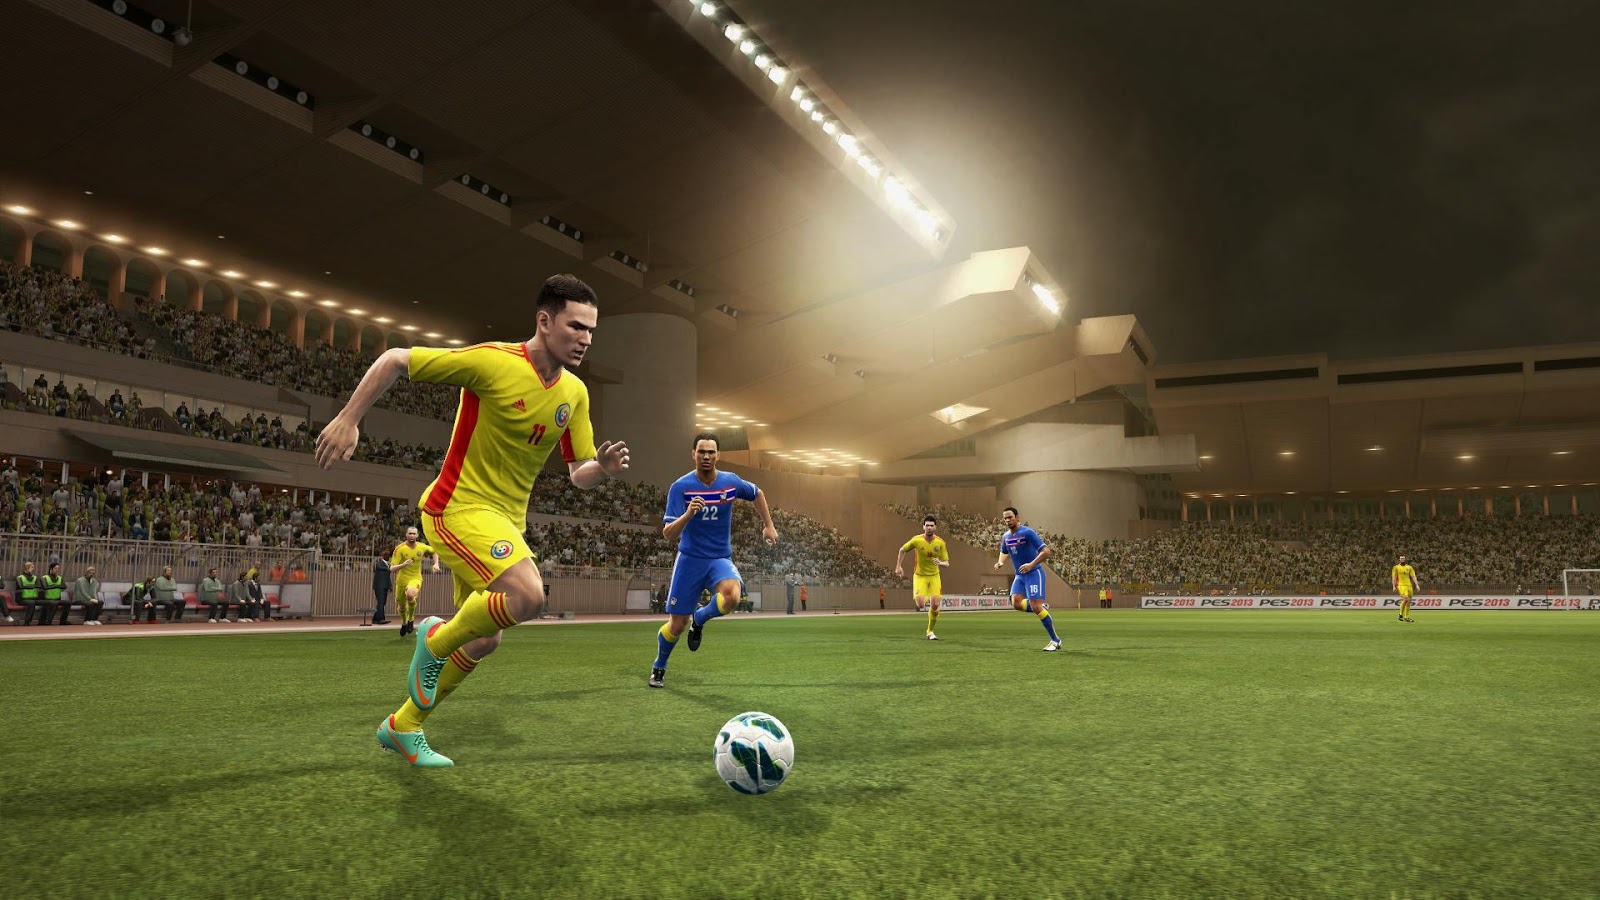 PES 2012: Pro Evolution Soccer PC - Zavvi Ireland